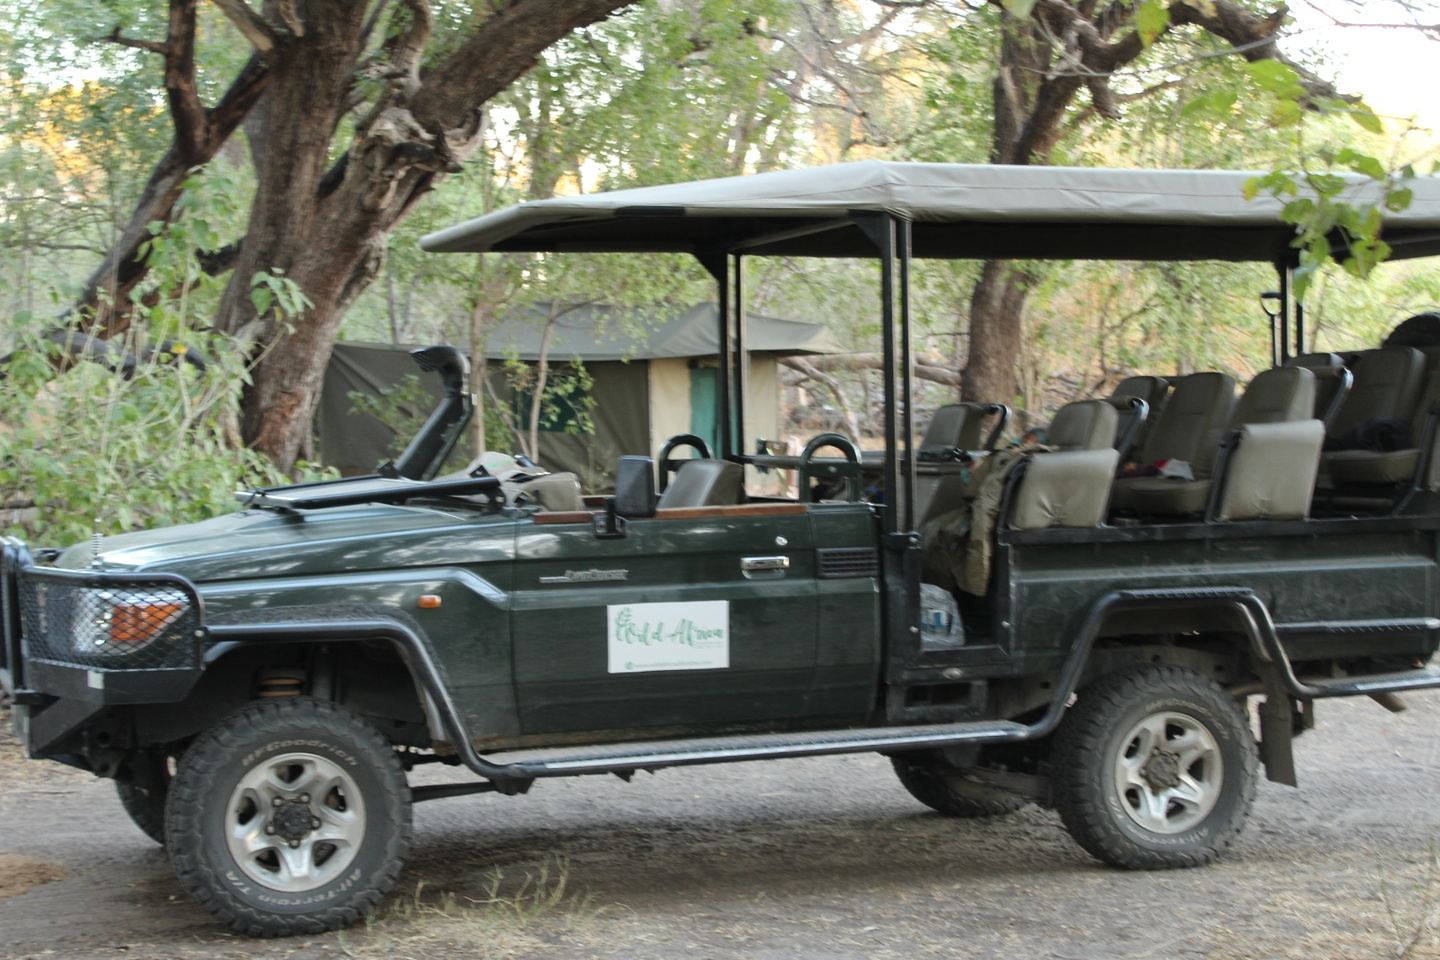 Botswana exploration mobile camping safari,9 days 8 nights.